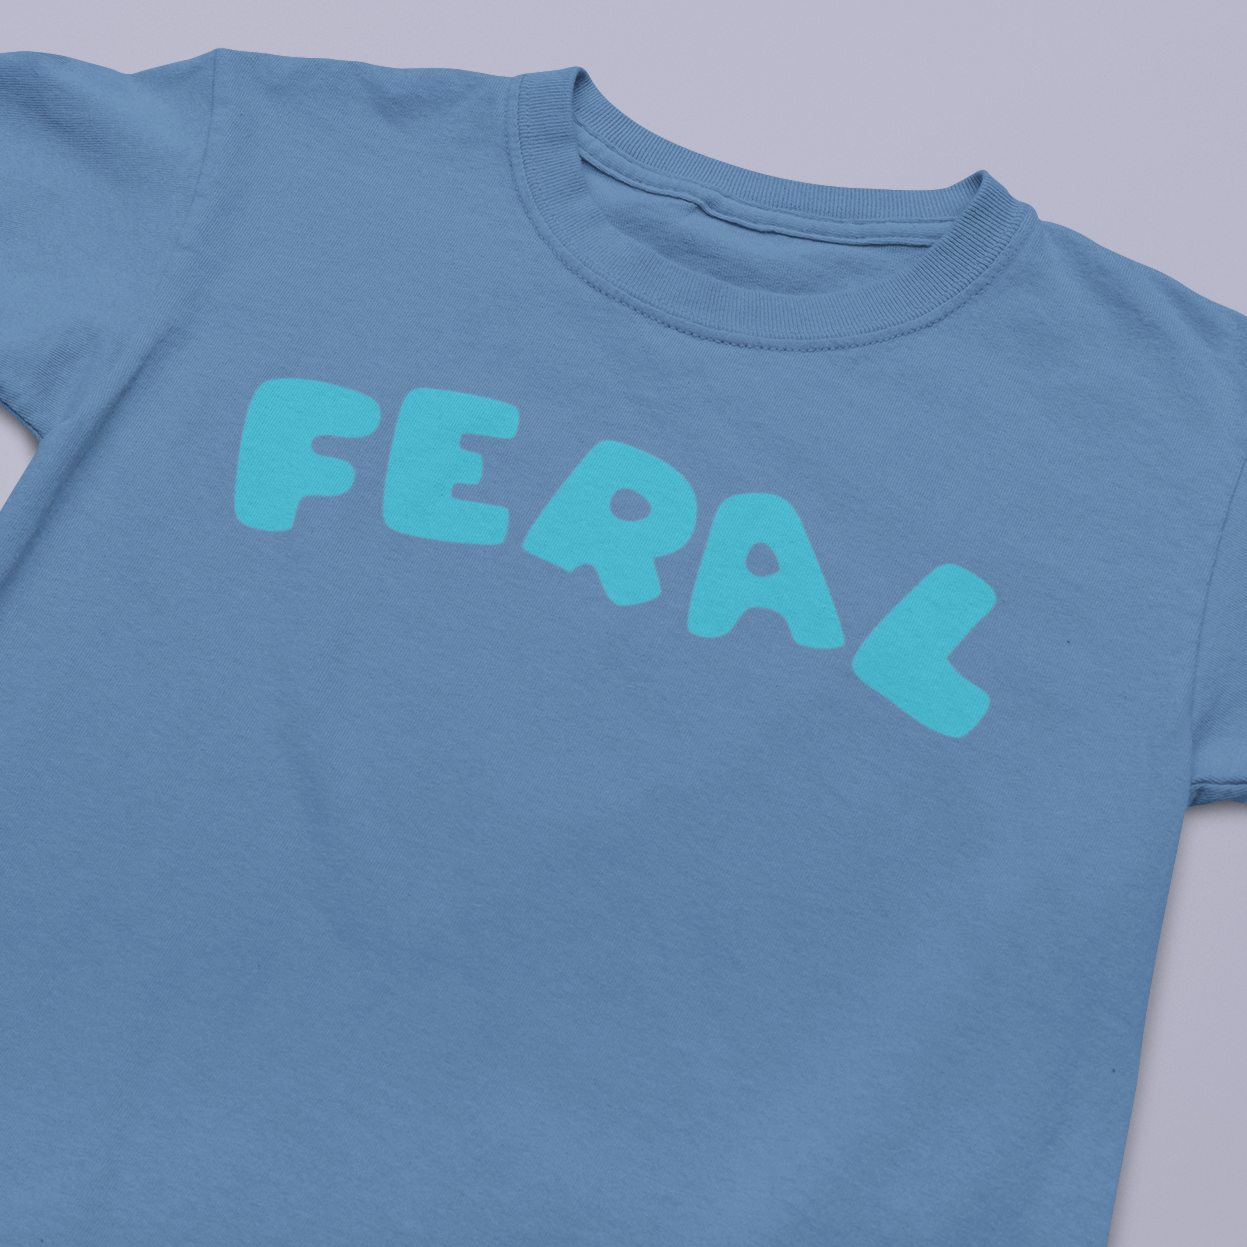 Unisex children’s cotton FERAL T-shirt